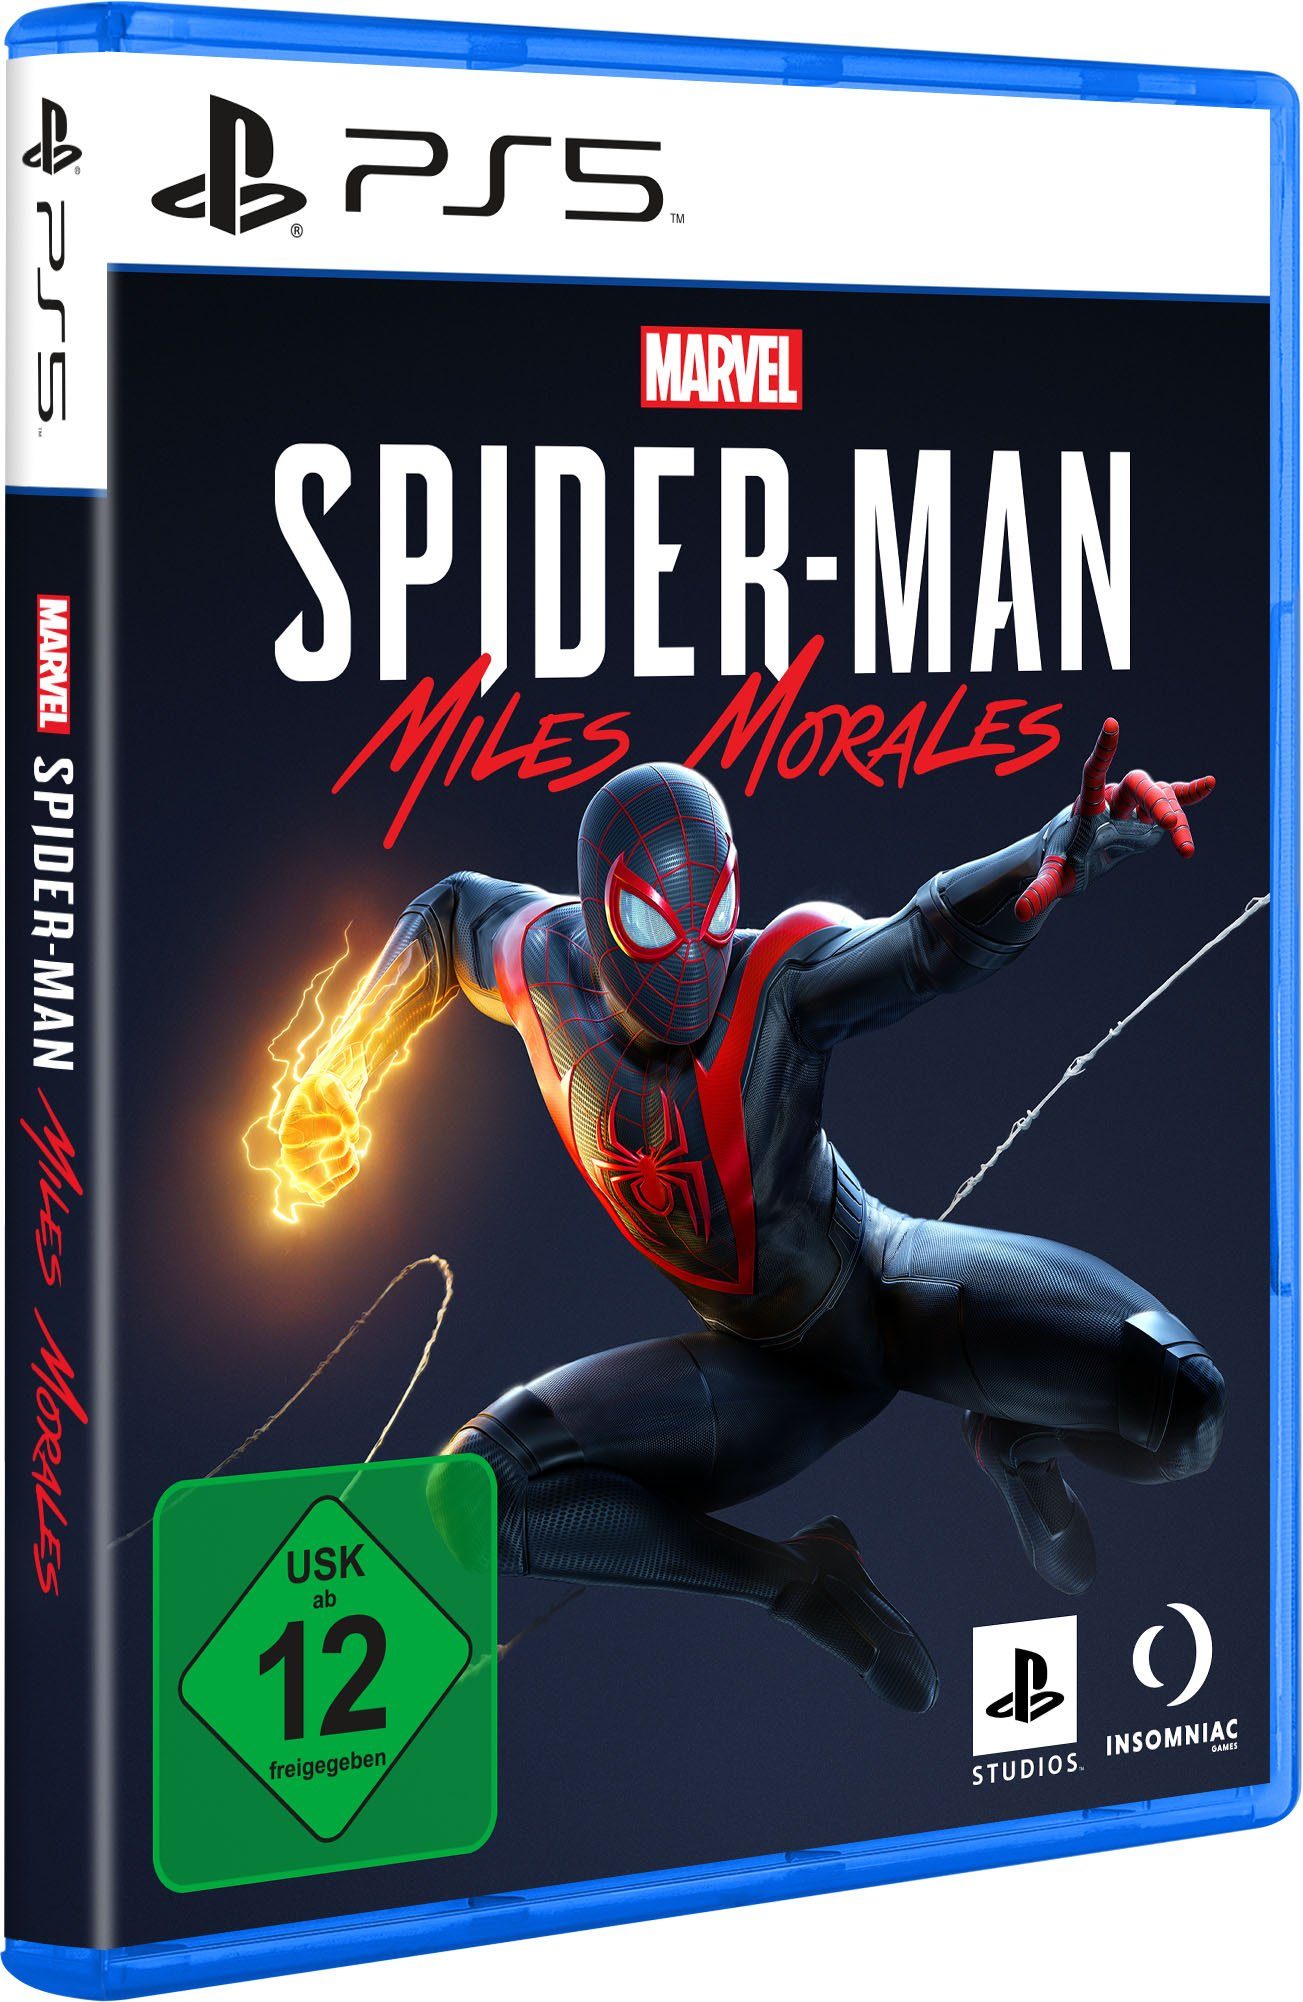 Spider-Man: Marvel's Morales Miles PlayStation 5